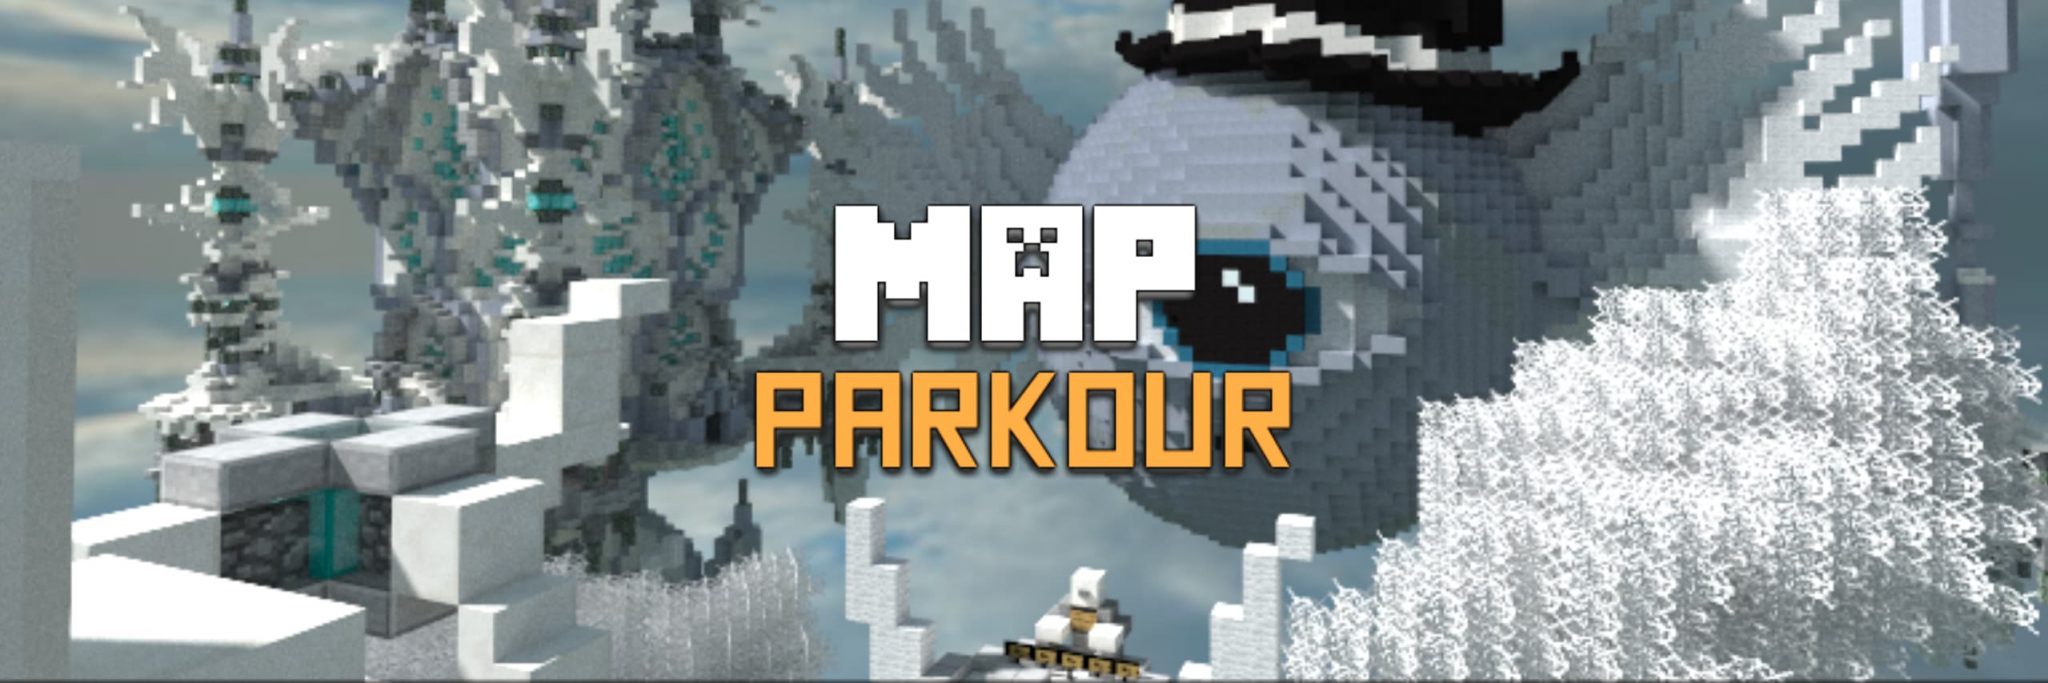 Map Minecraft Parkour 2048x683 